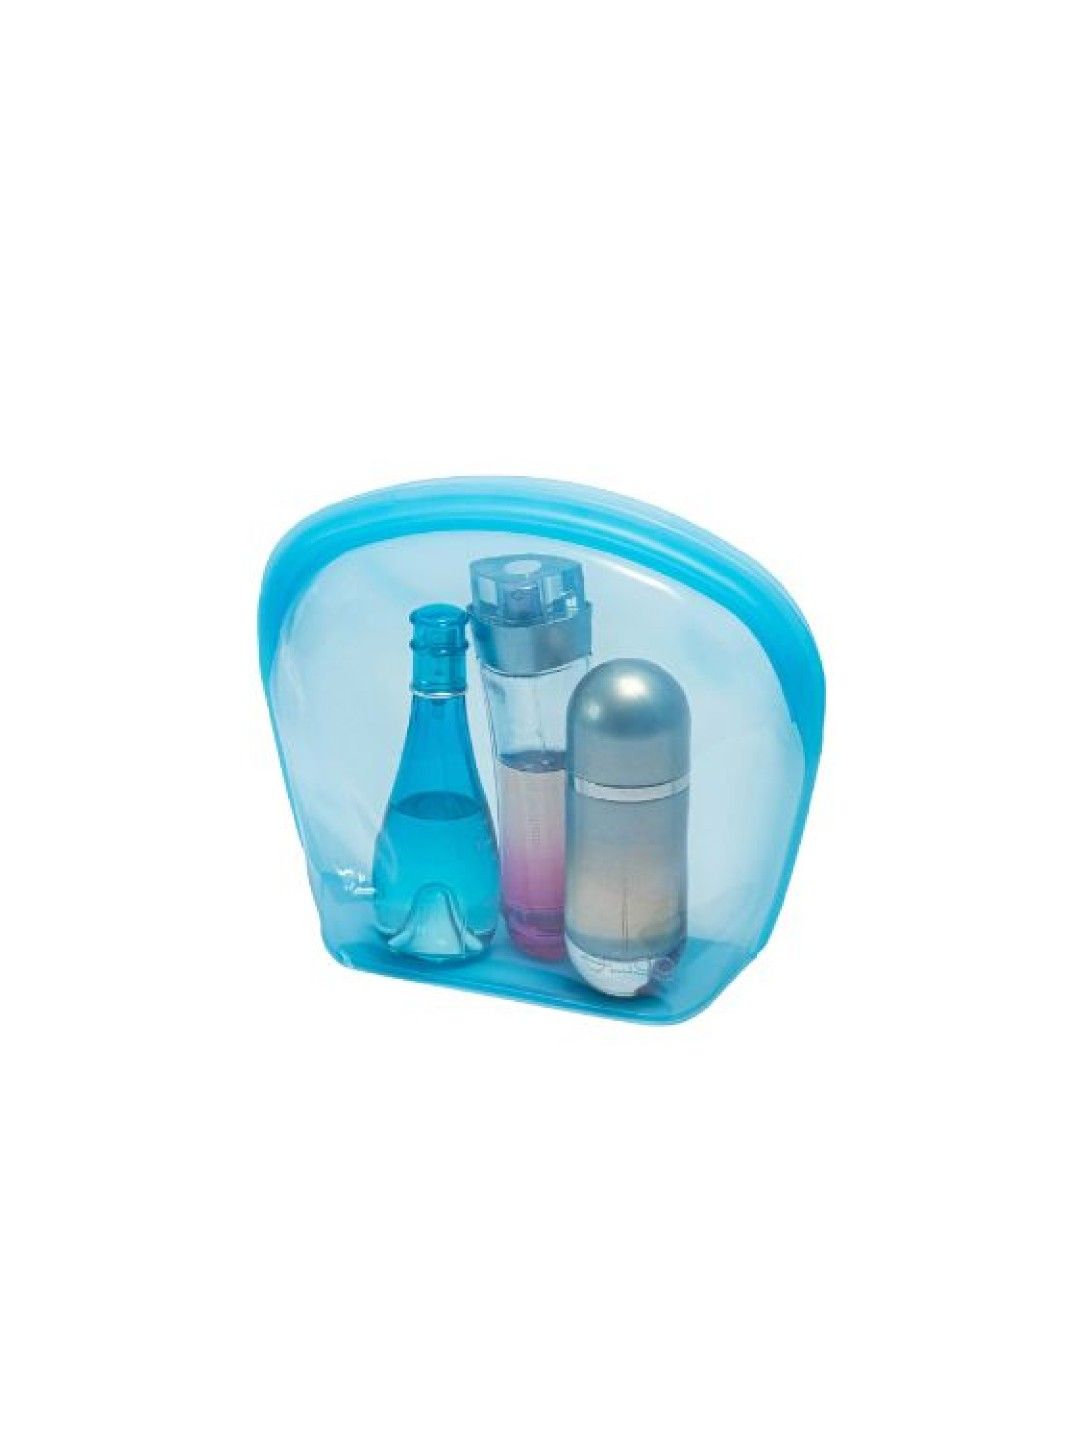 Fibo Bottles Multipurpose Silicone Pouch (2000ml) (Blue- Image 1)